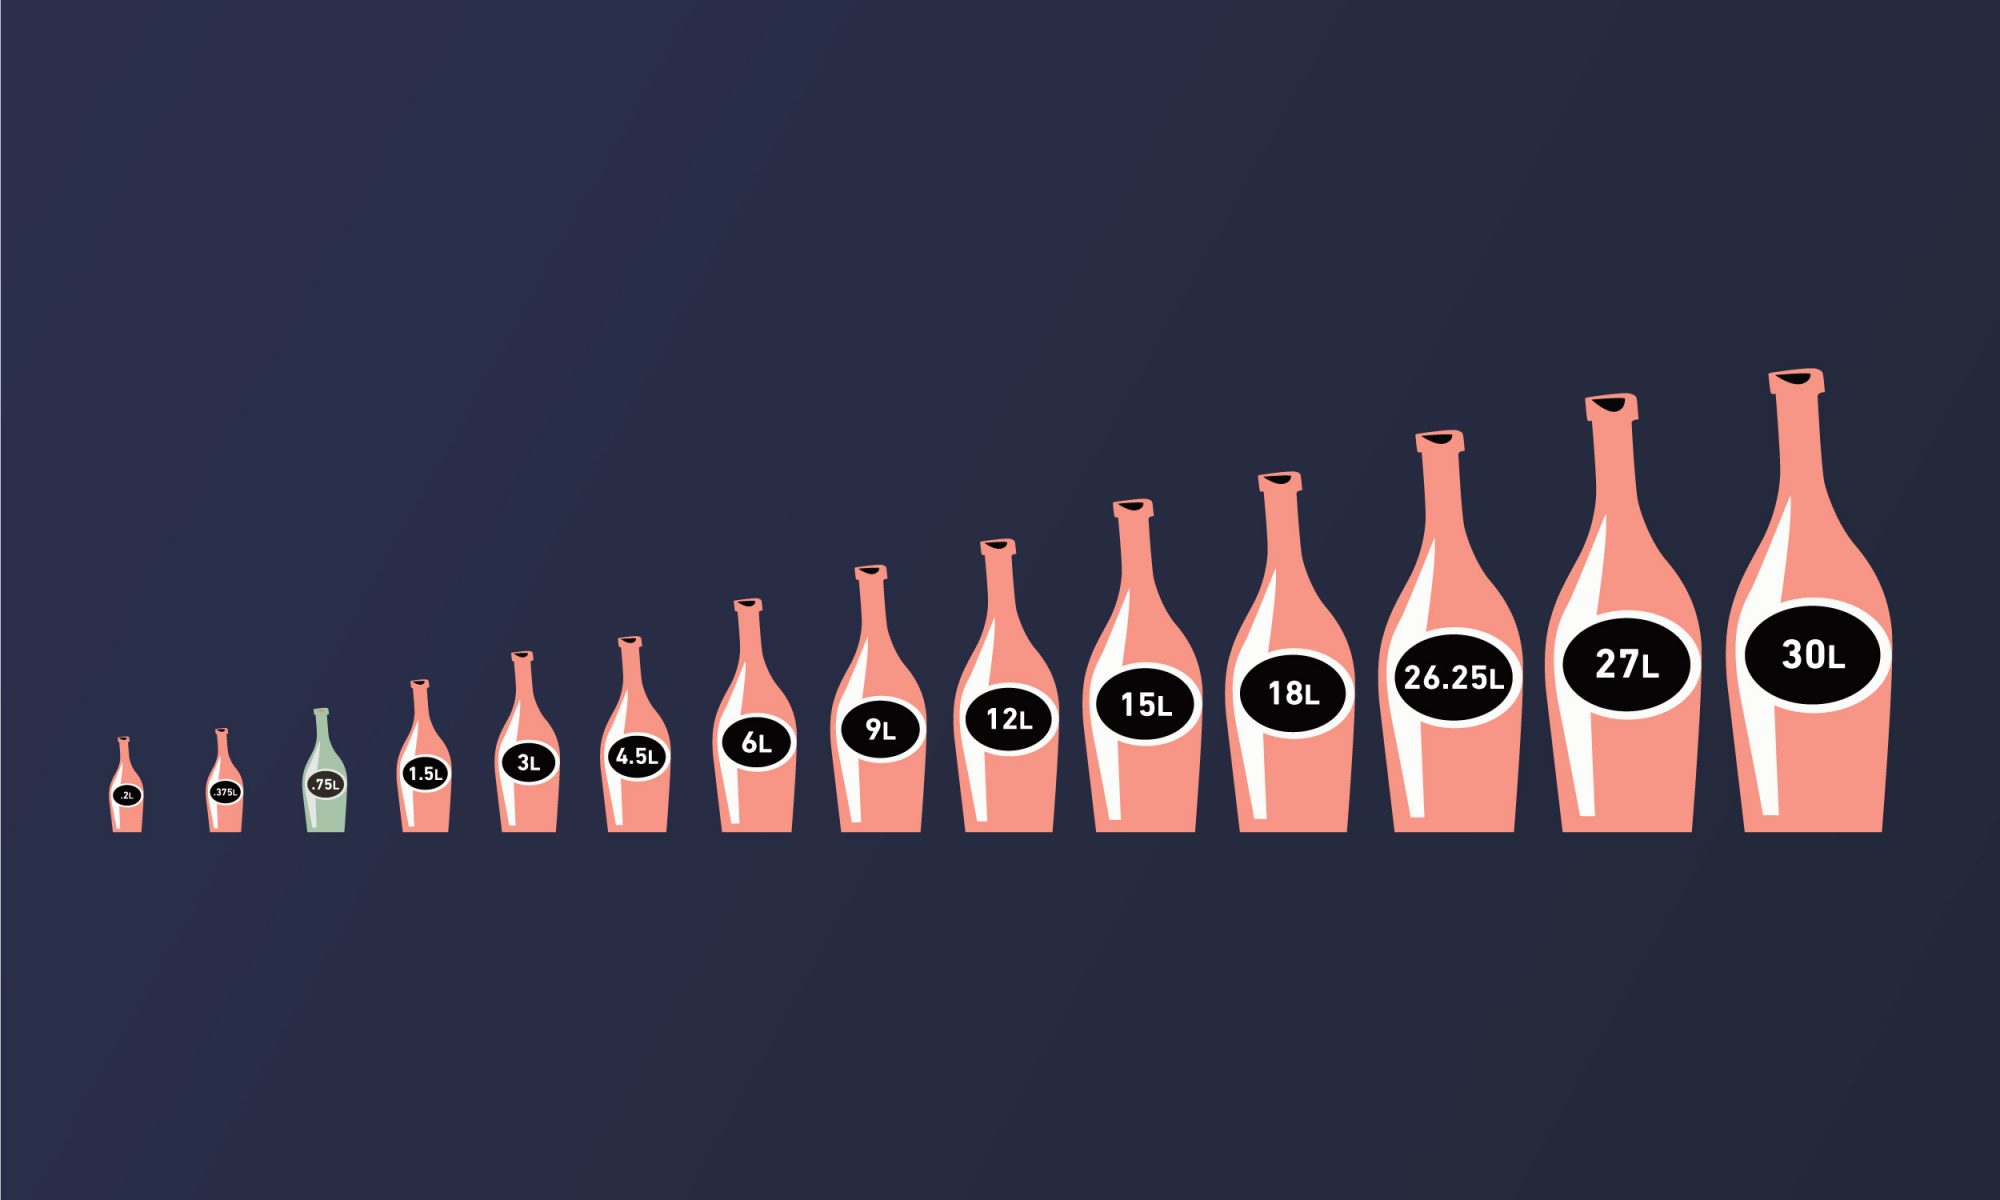 https://static.onecms.io/wp-content/uploads/sites/19/2018/02/13/champagne-bottle-sizes-hero-2000.jpg